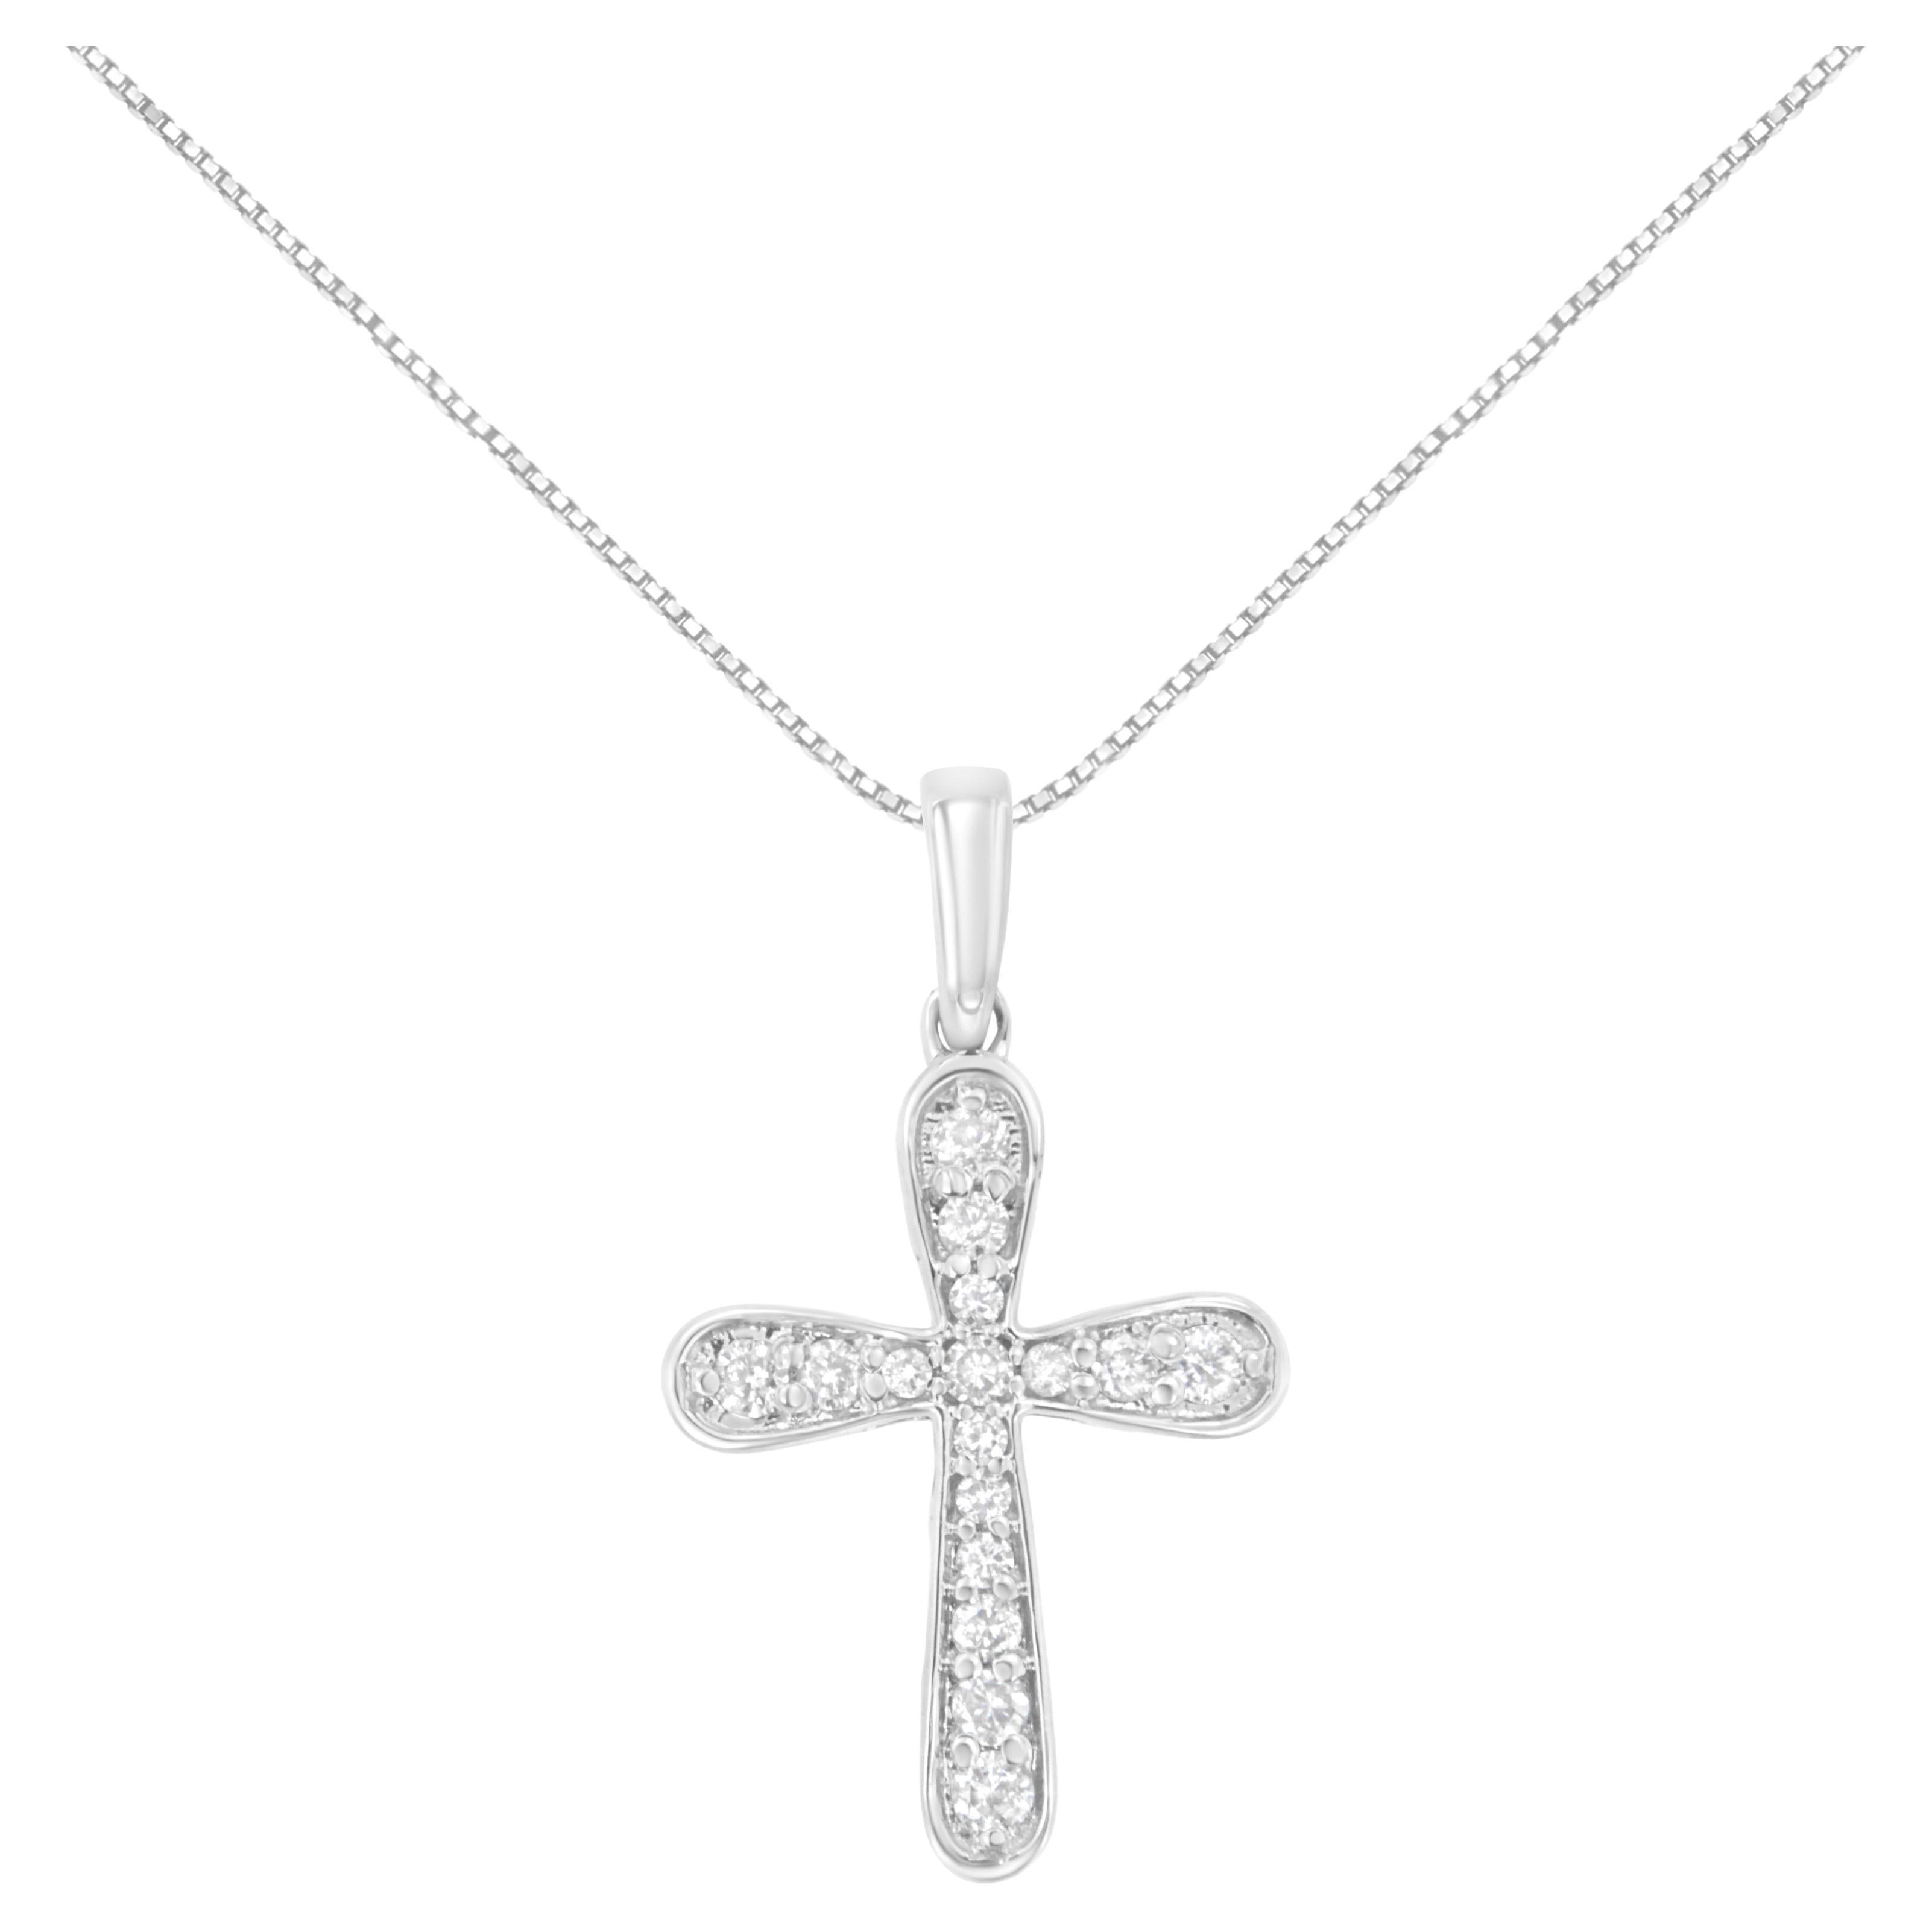 .925 Sterling Silver 1/4 Carat Diamond Inlaid Cross 18" Pendant Necklace